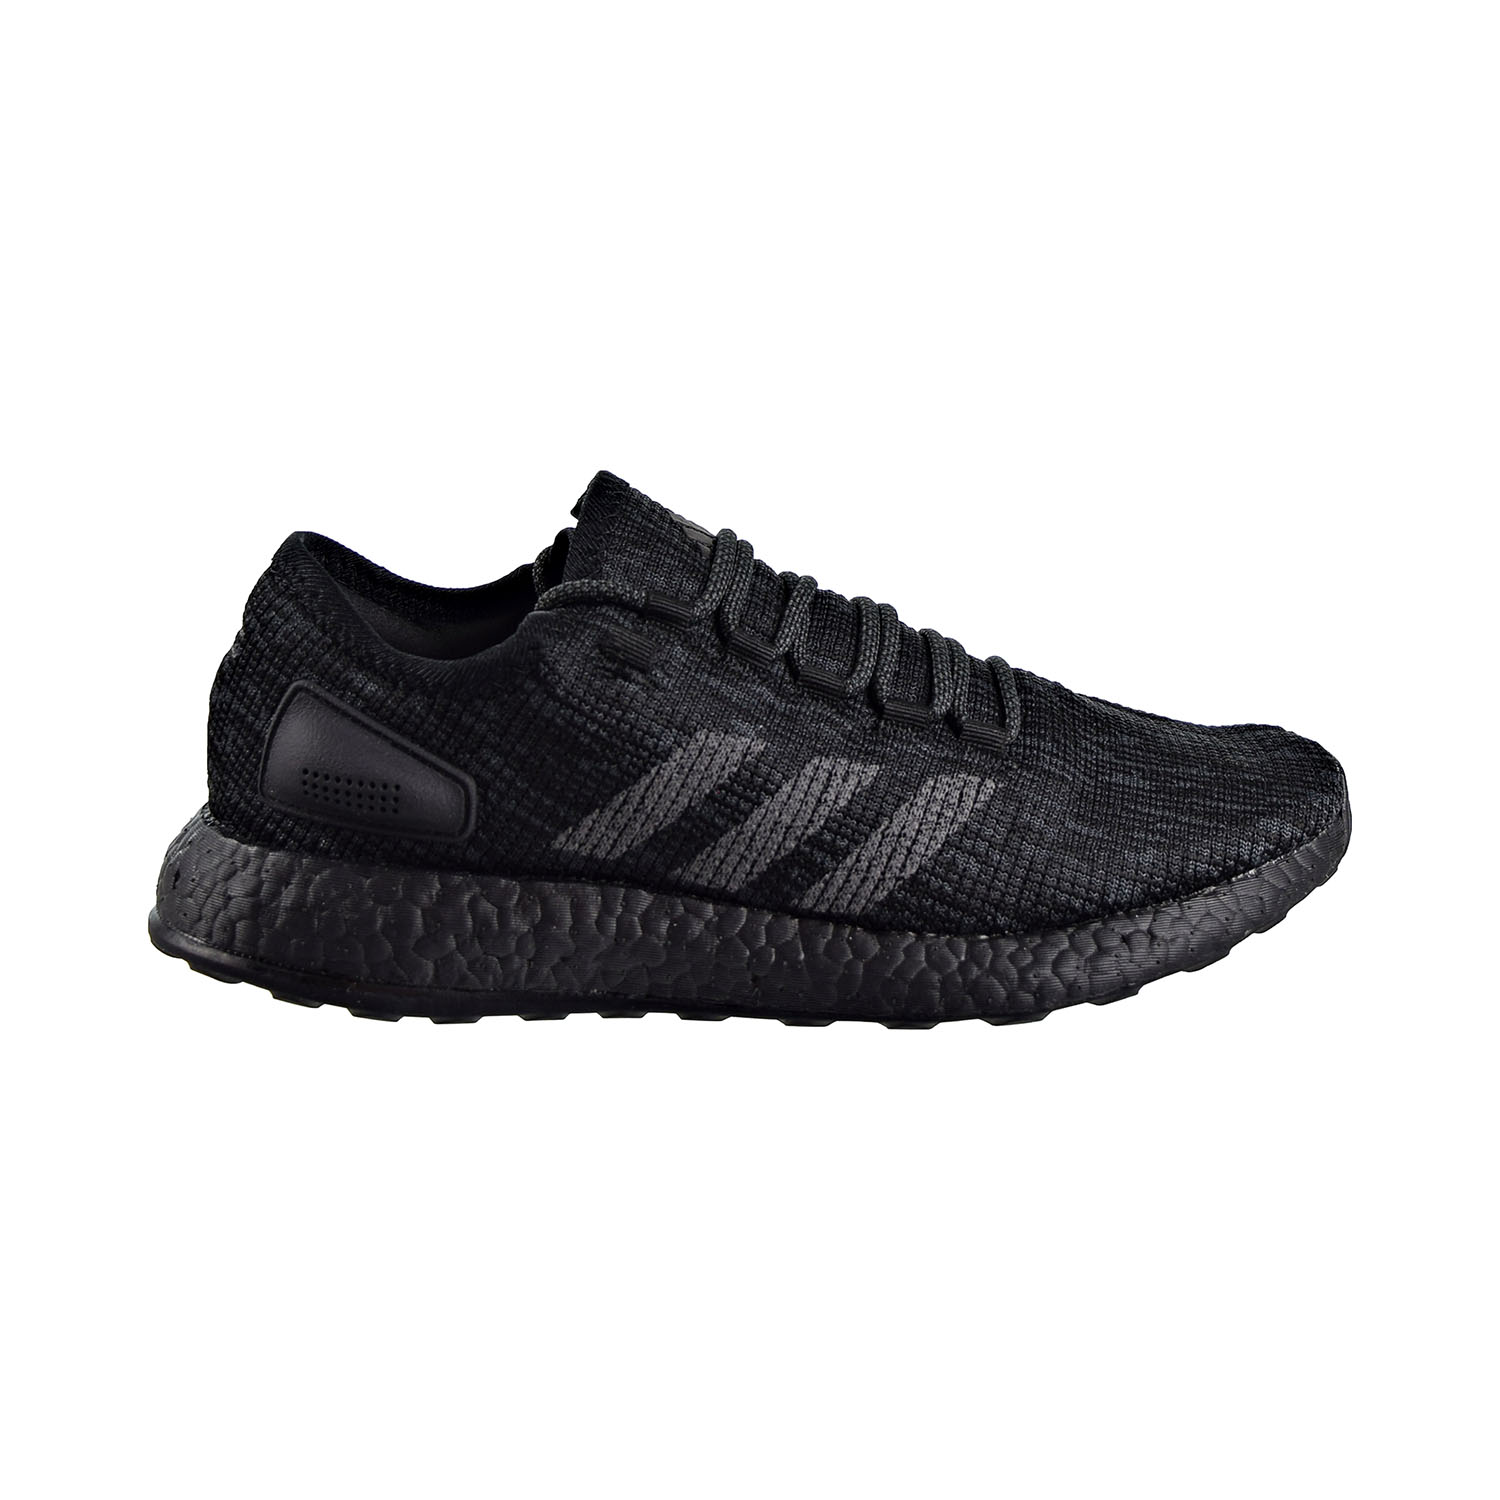 Adidas Pureboost "Triple Black" Men's Running Shoes Black-Dark Grey bb6288